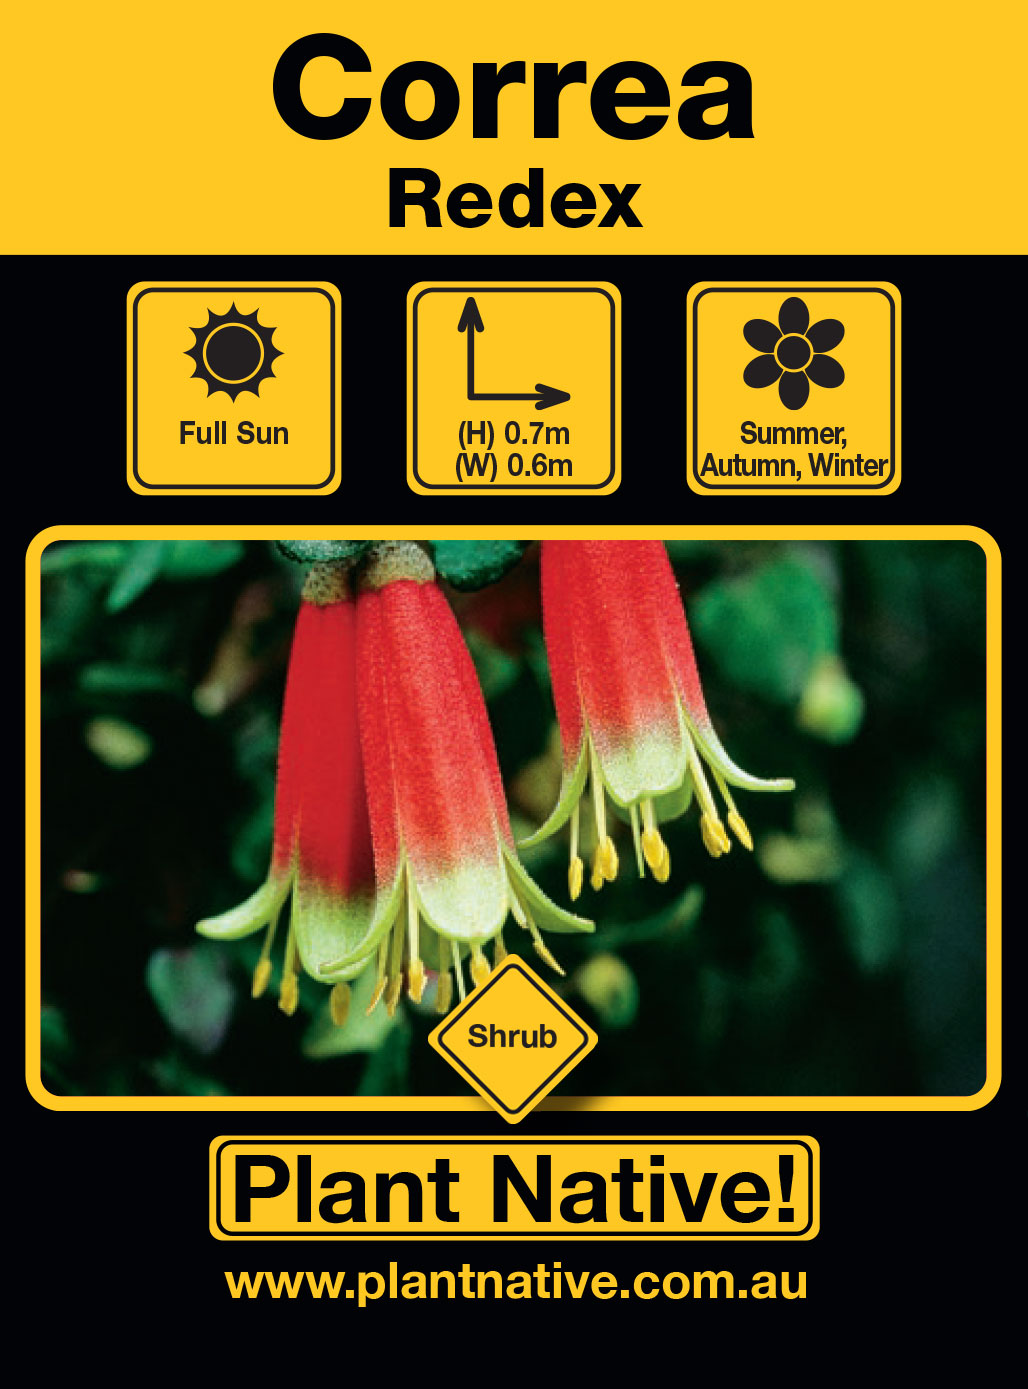 Correa Redex - Plant Native!